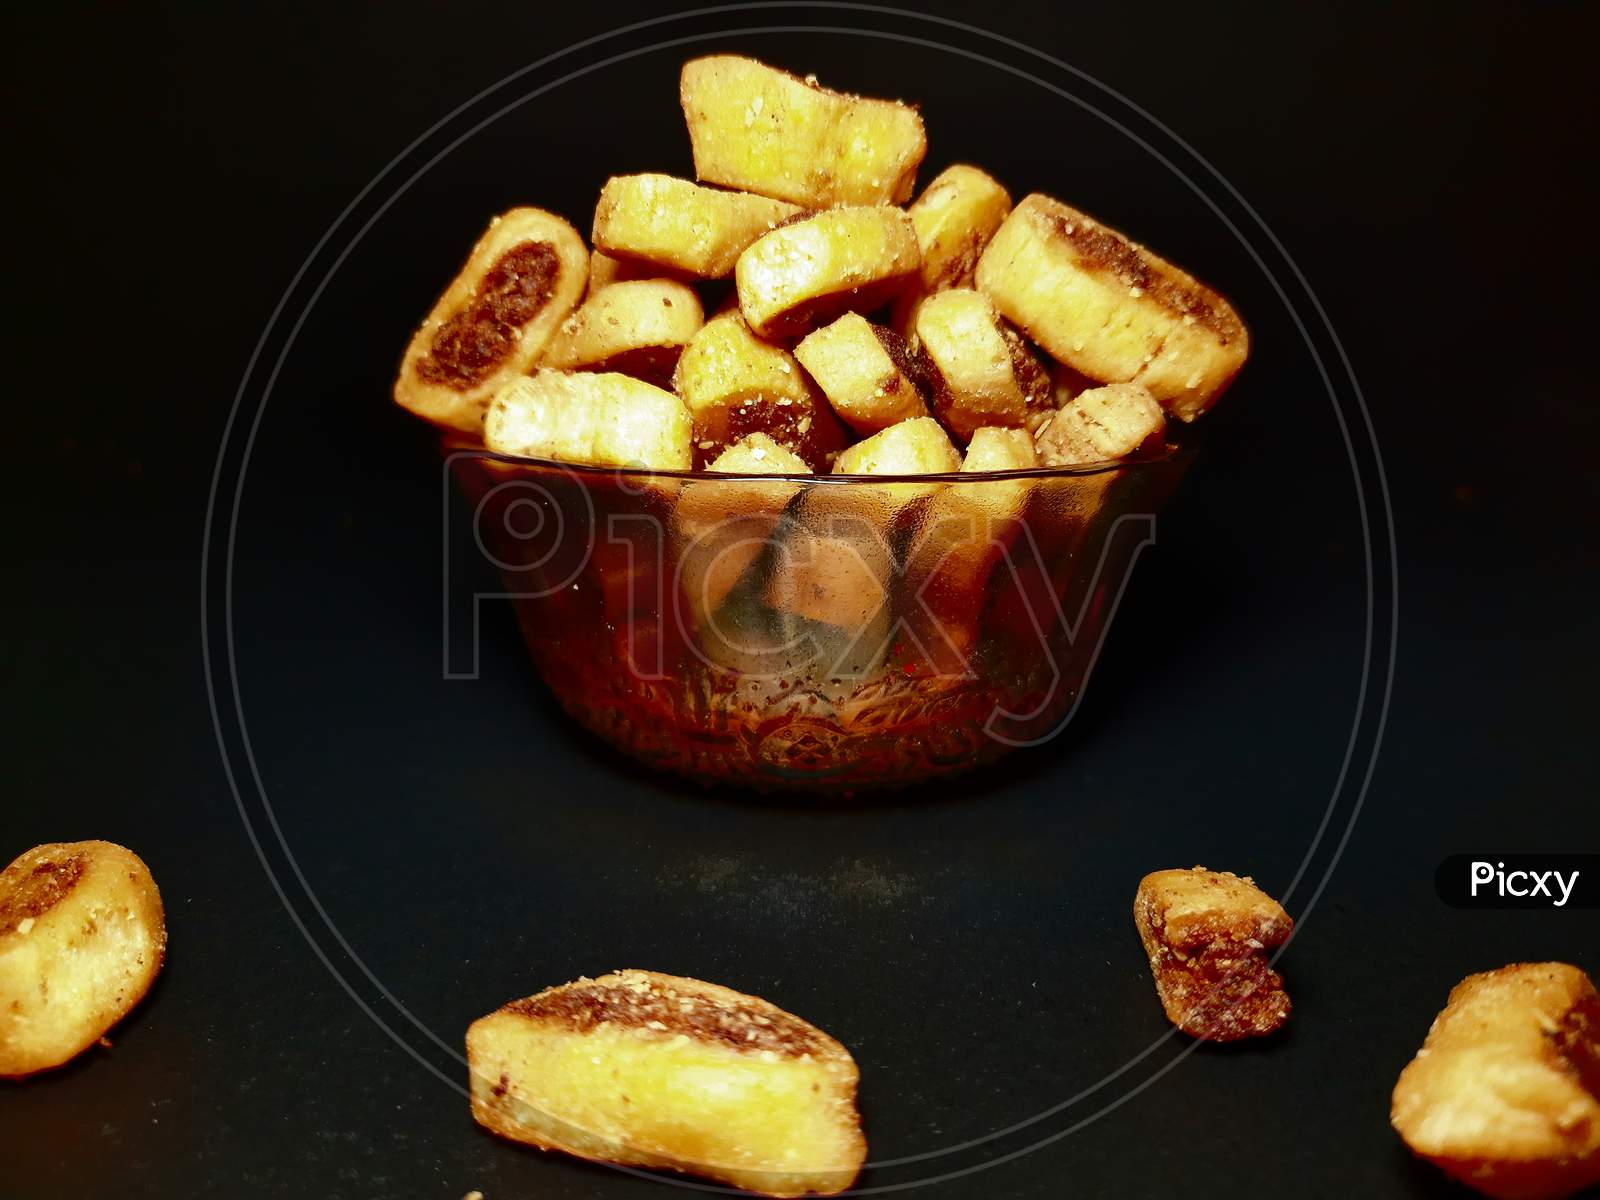 Royalty-Free Bhakarwadi Snacks Stock Images Photos And Vectors